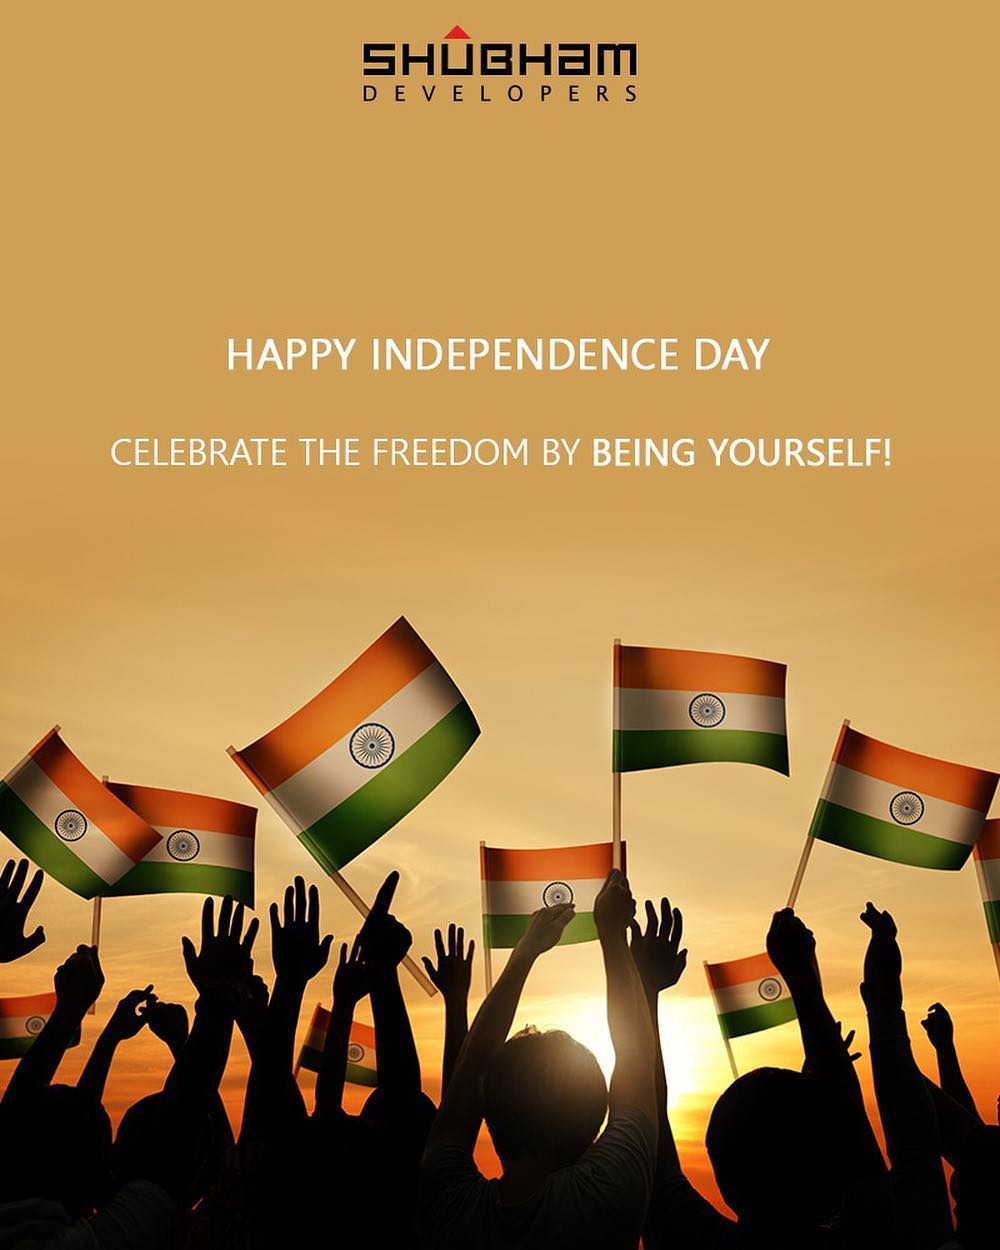 Shubham Developers,  HappyIndependenceDay, IndependenceDay18, IndependenceDay, IndependenceWeek, Celebration, 15thAugust, Freedom, ShubhamDevelopers, RealEstate